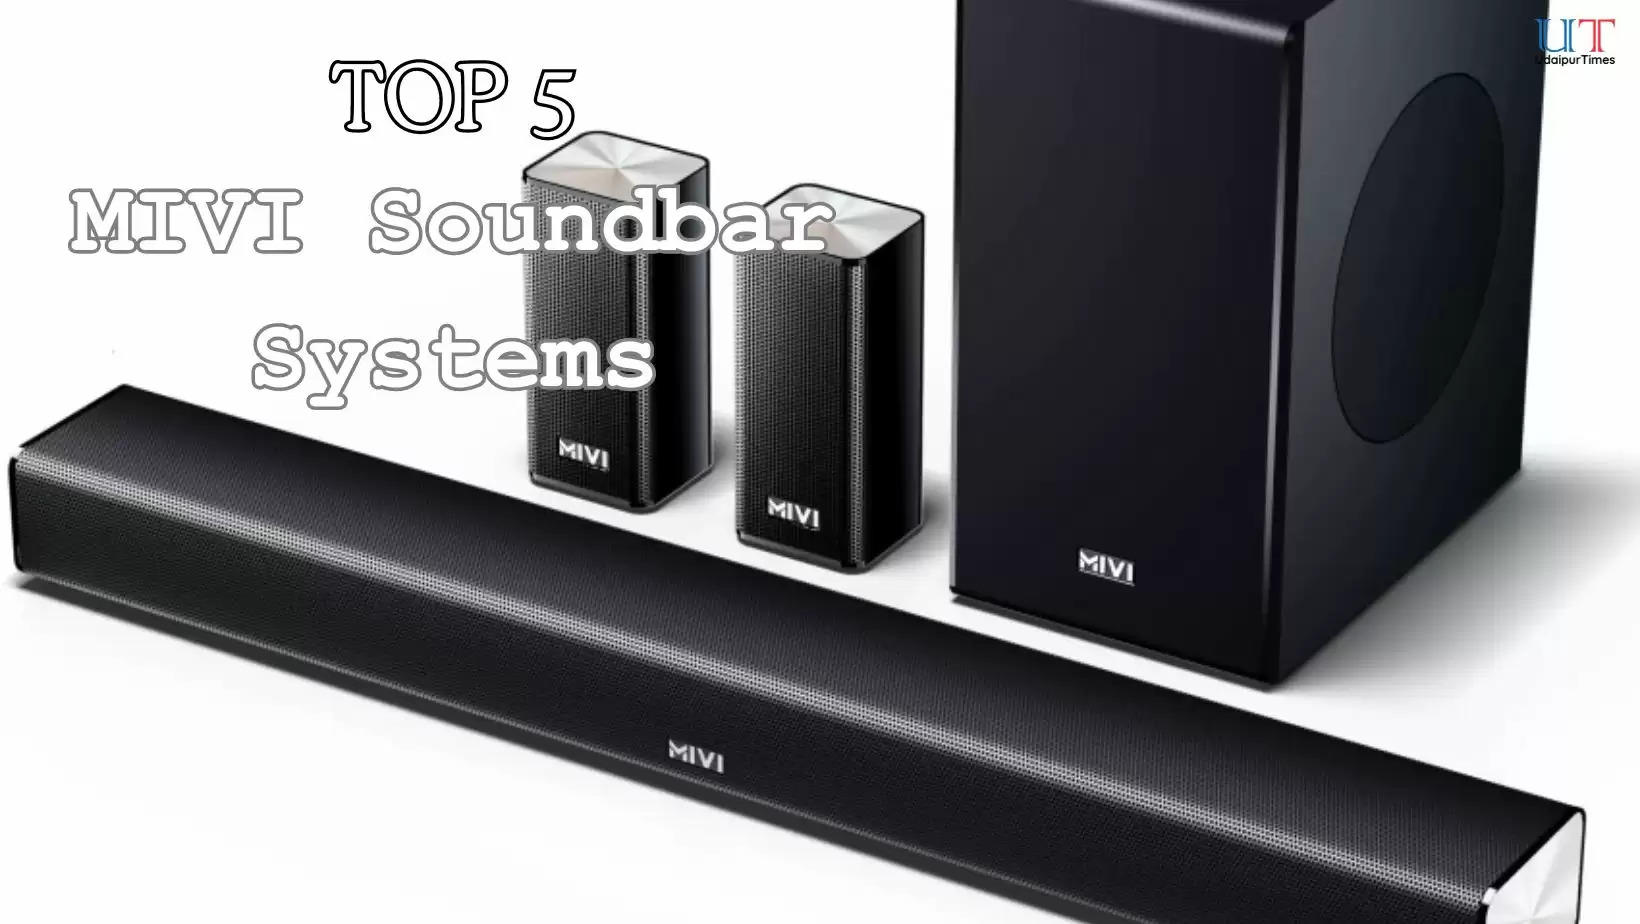 Made in India Soundbar Systems Top 5 Soundbars in India